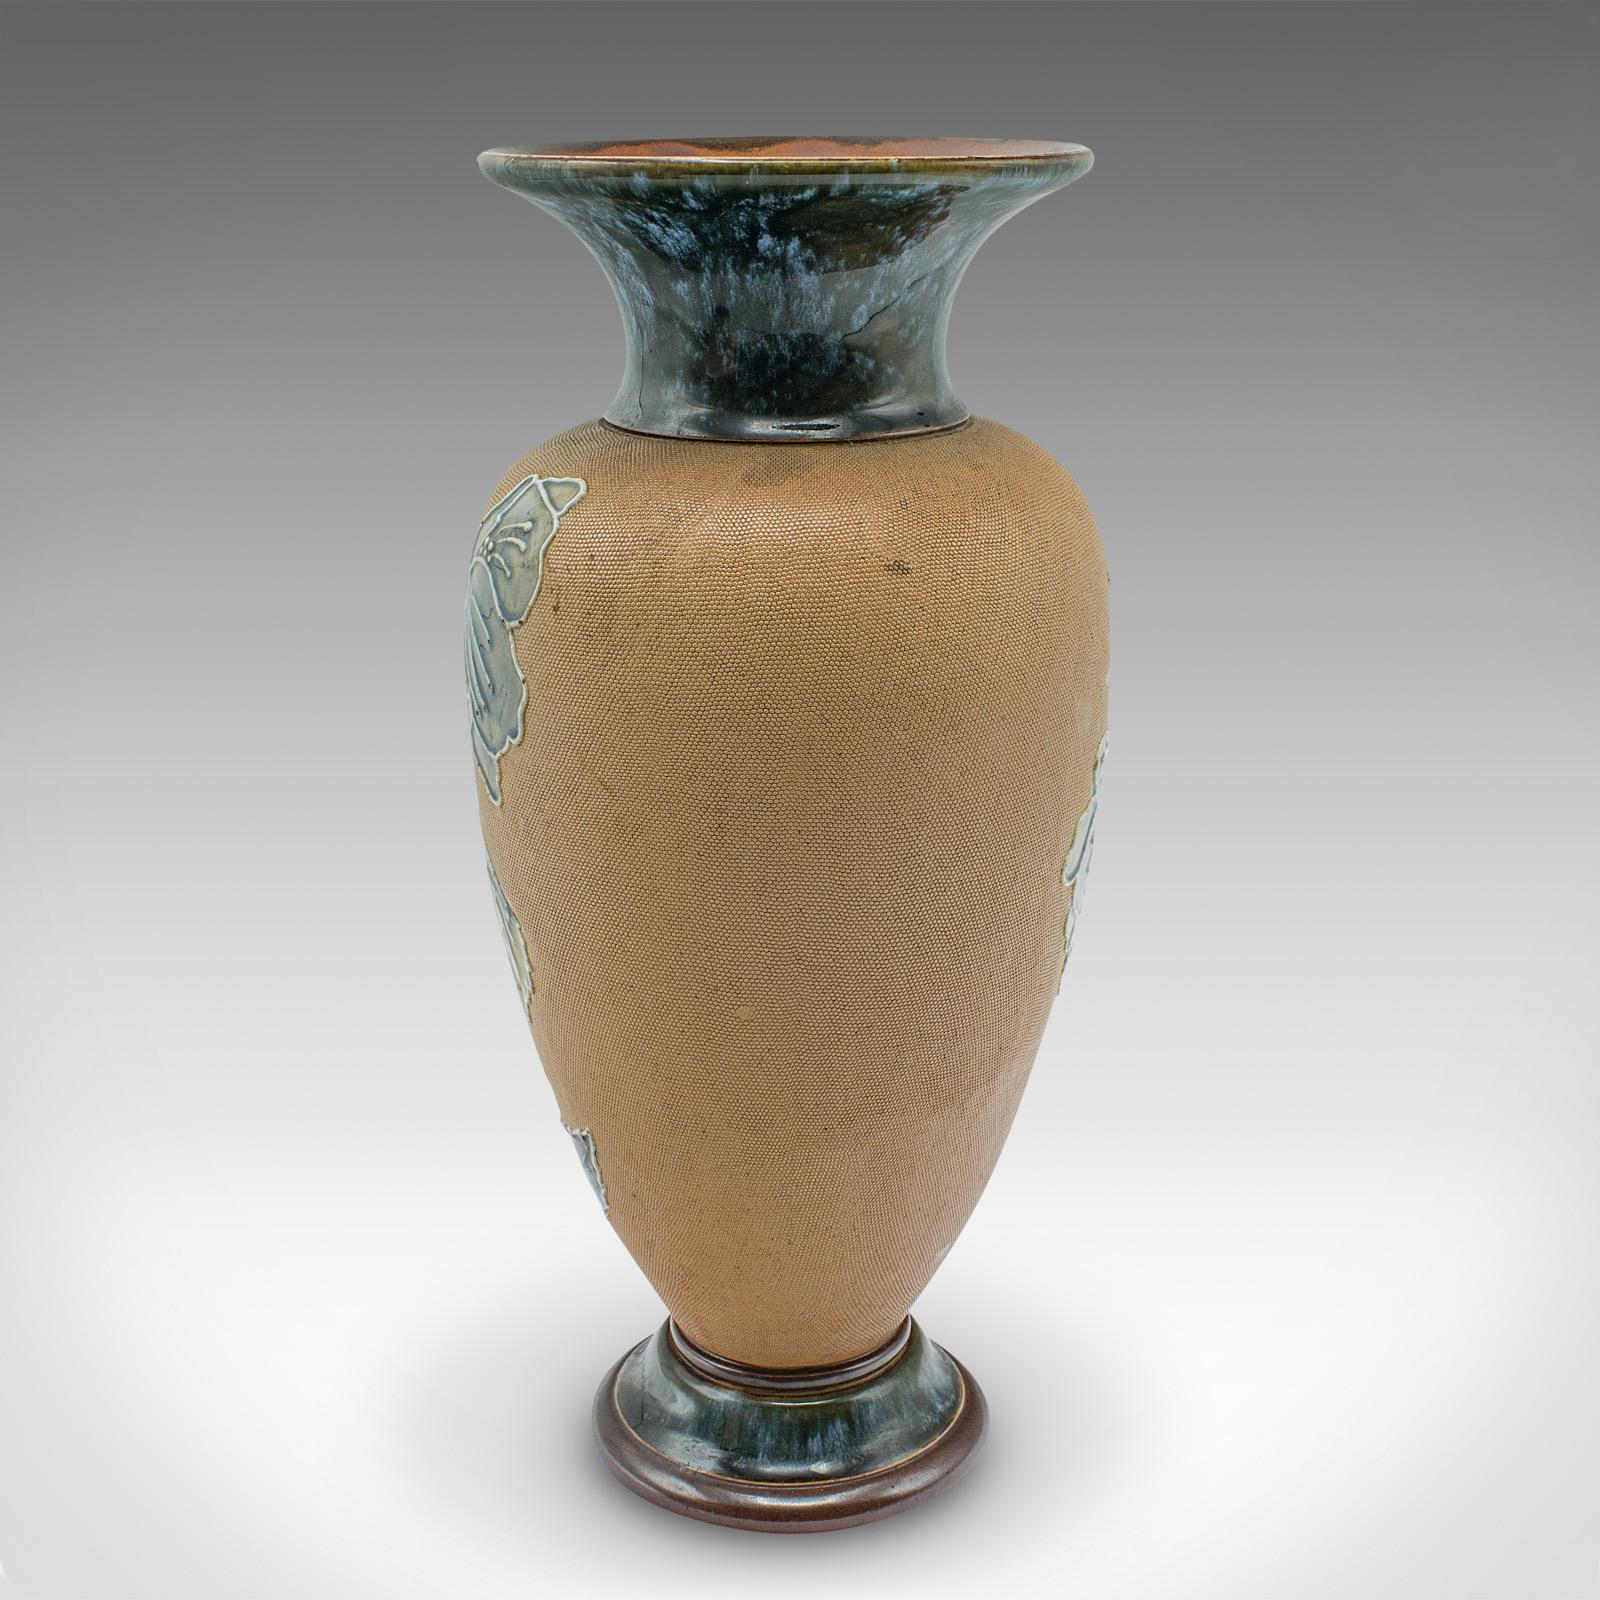 Pair Of Antique Flower Vases, English, Ceramic, Display Urn, Edwardian, C.1910 For Sale 1